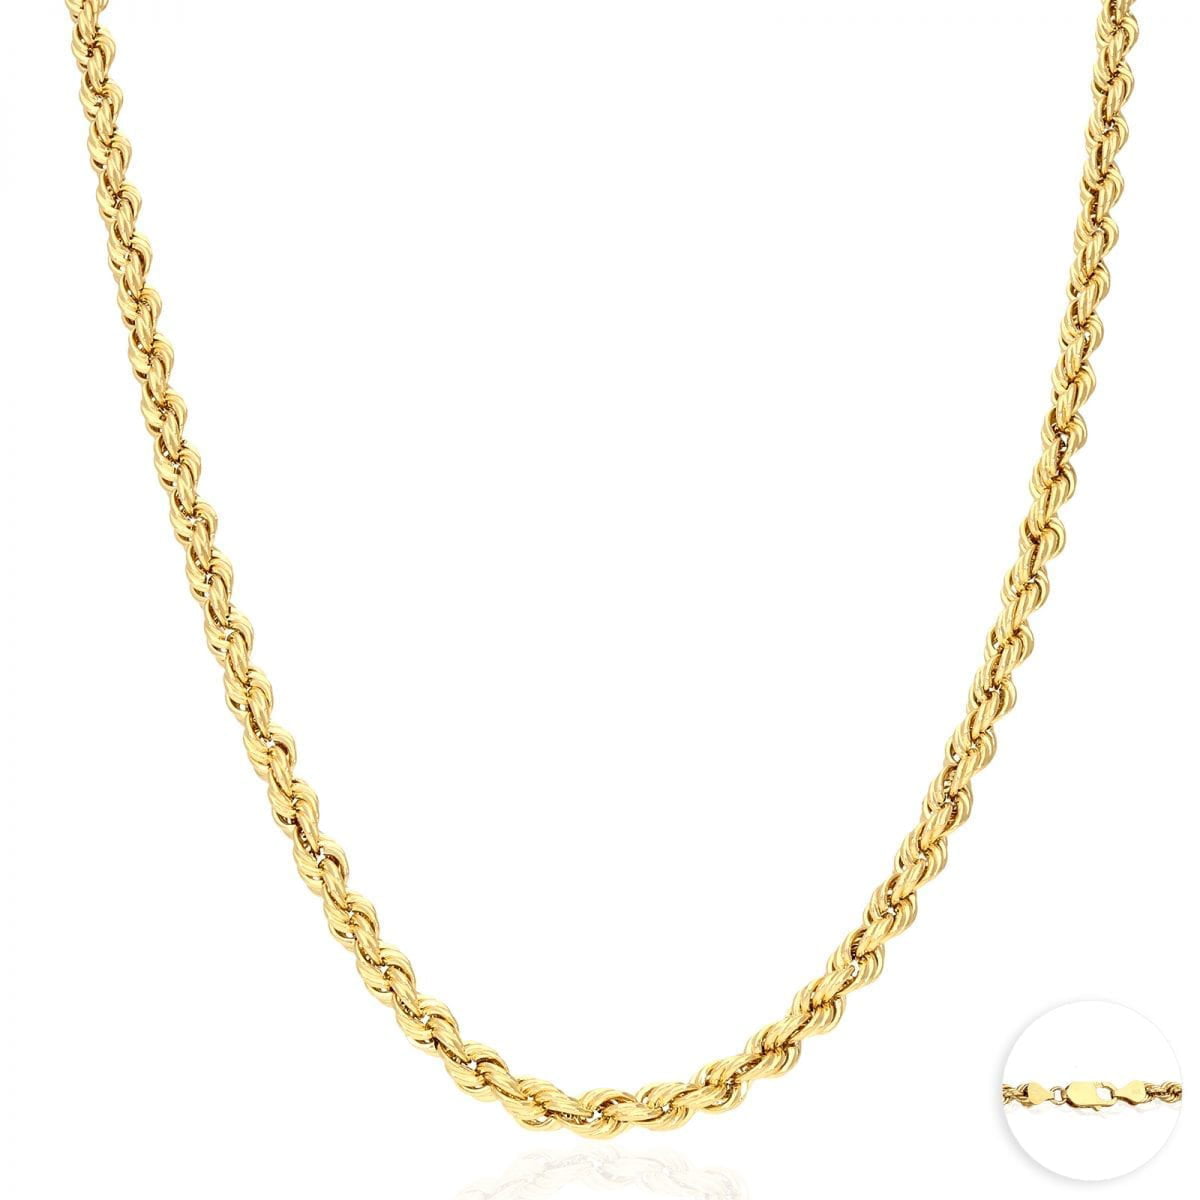 Kooljewelry 10k Yellow Gold 1.8 mm Rope Chain Necklace